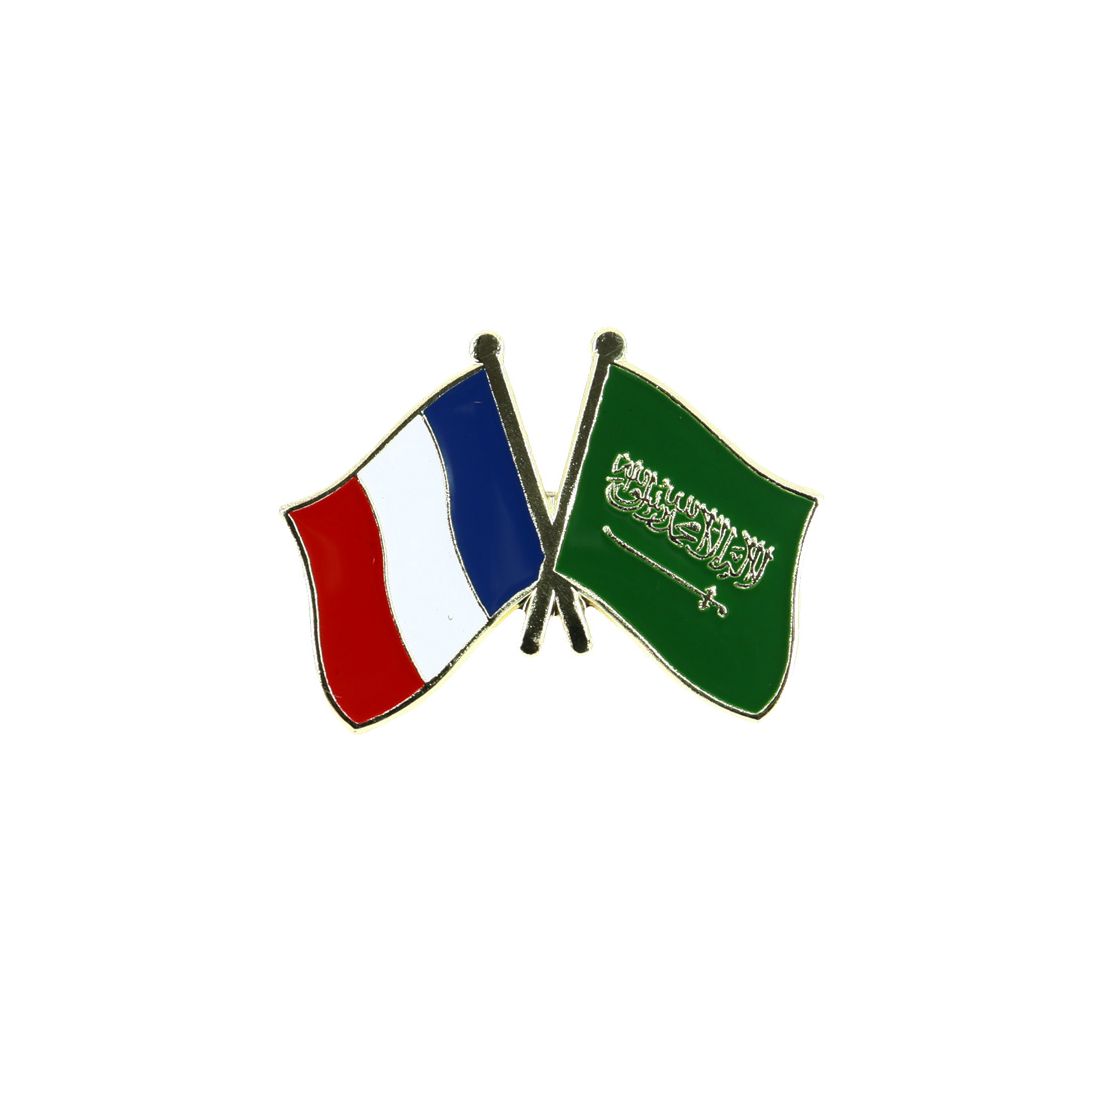 Pin's Drapeaux Jumelage France Arabie Saoudite - Franco-Saoudien Clj Charles Le Jeune